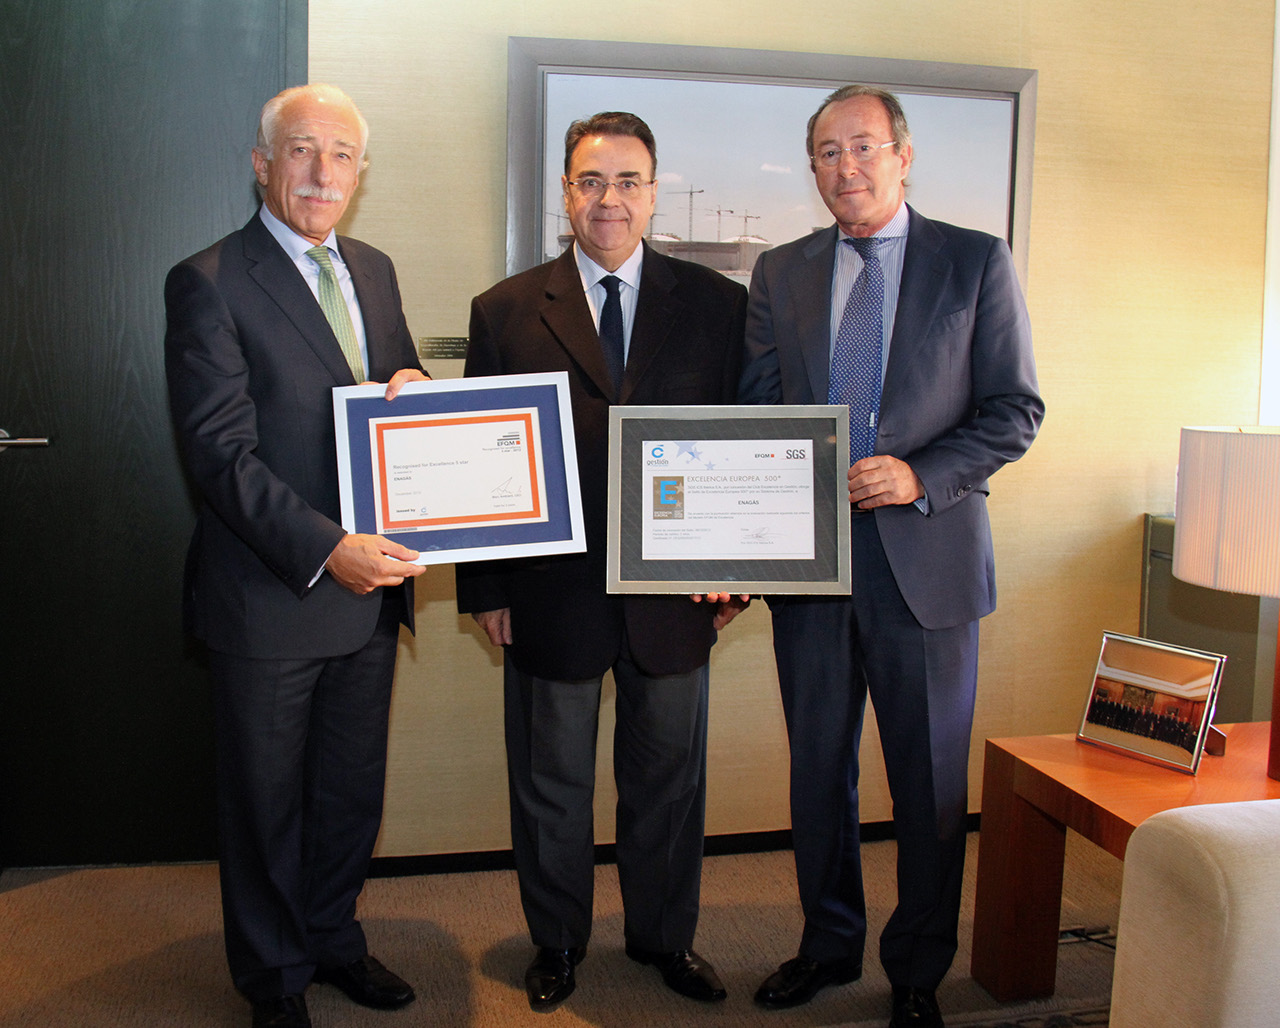 Enagás professionals receiving an award